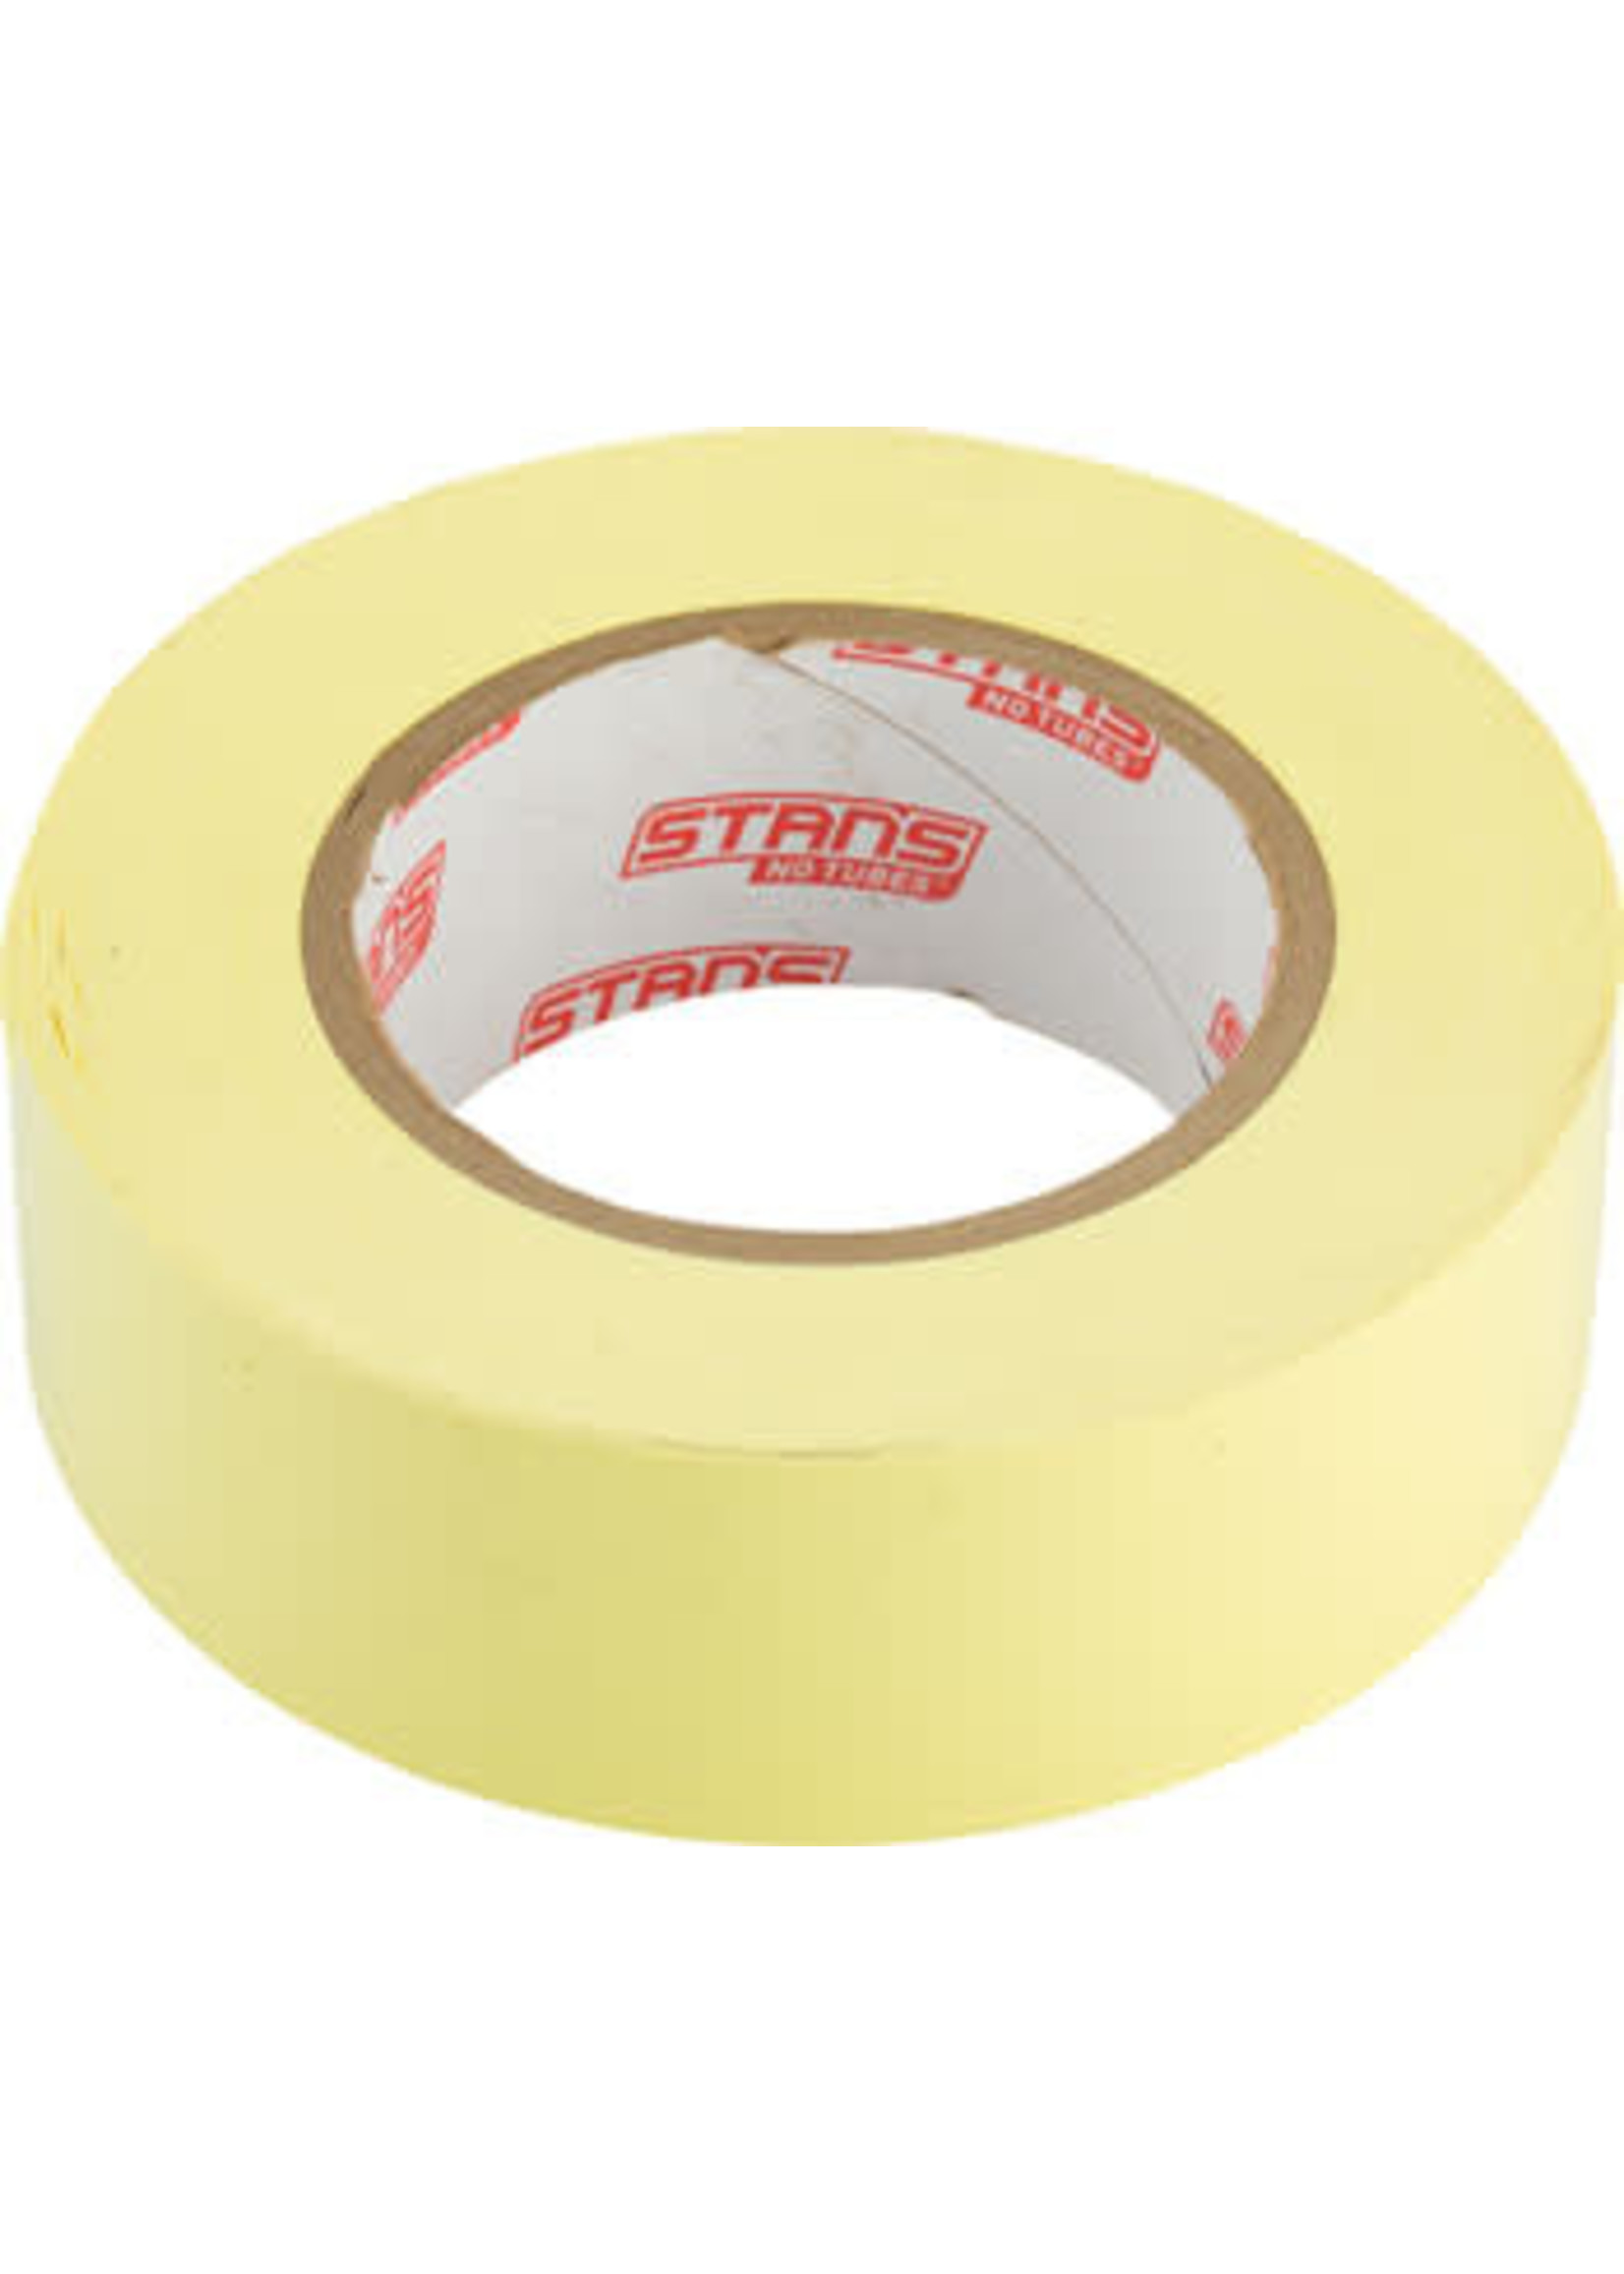 Stan's No-Tubes Stan's NoTubes Rim Tape: 33mm x 60 yard roll